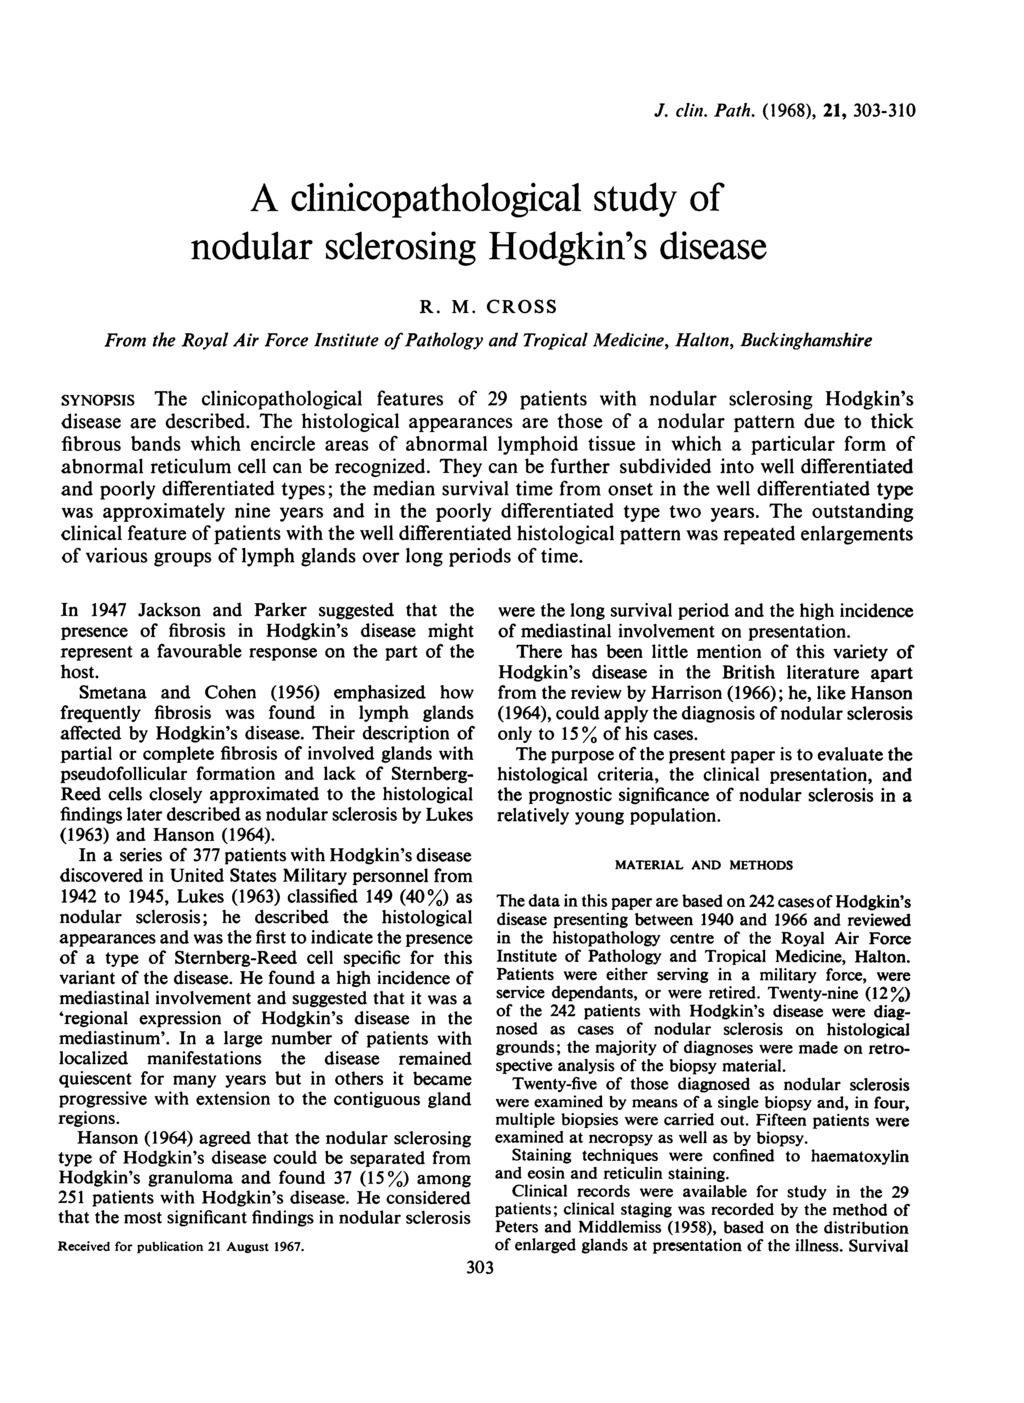 A clinicopathological study of nodular sclerosing Hodgkin's disease R. M. CROSS J. clini. Path.